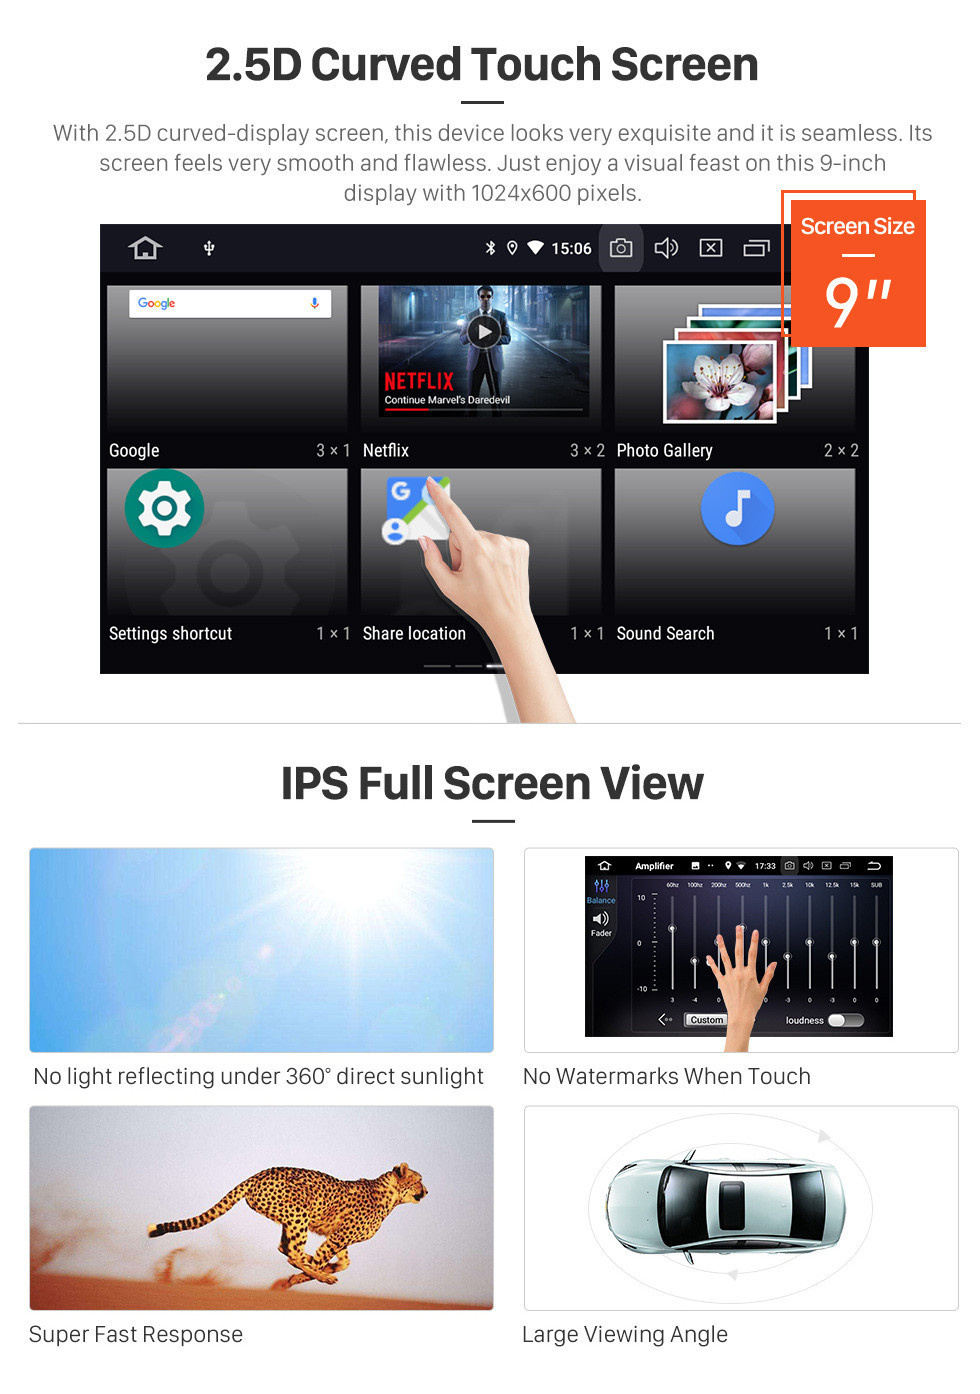 Seicane HD Touchscreen 2007-2012 Suzuki Jimmy Android 11.0 9 polegada GPS Navegação Rádio Bluetooth WIFI USB Carplay suporte TPMS DVR OBD2